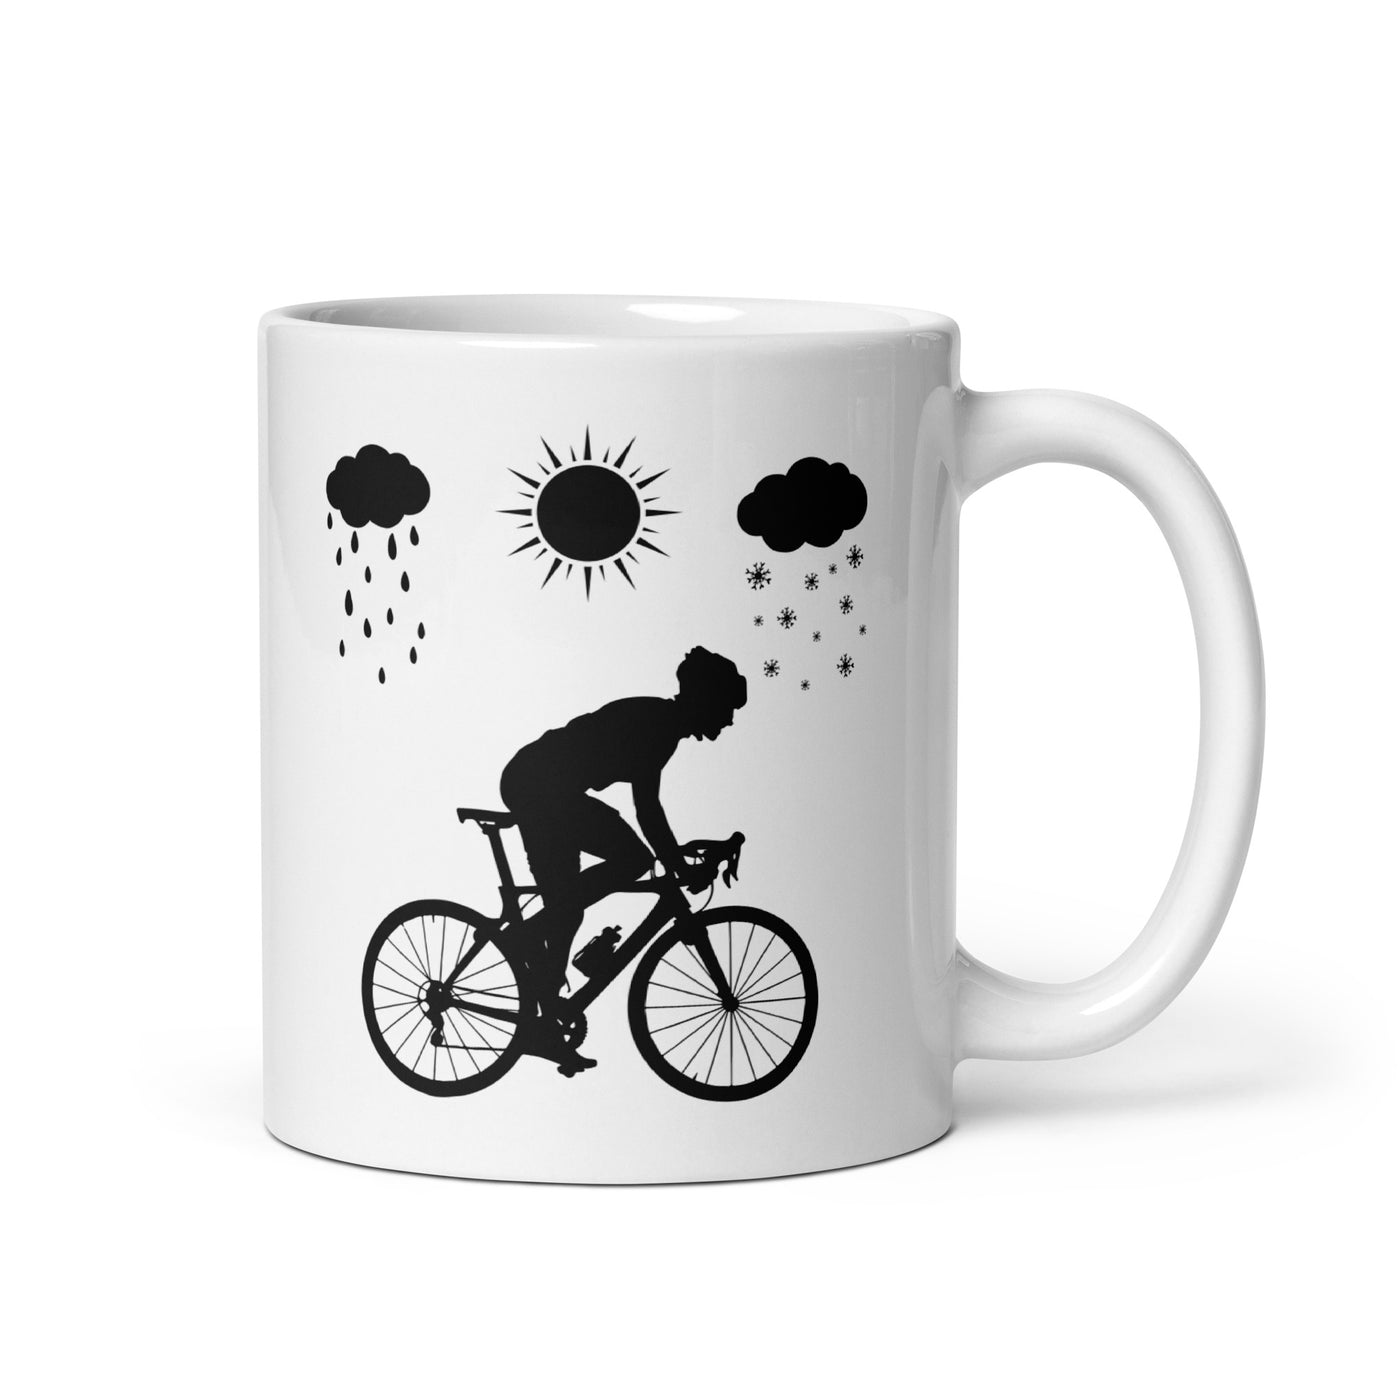 All Seasons And Cycling - Tasse fahrrad